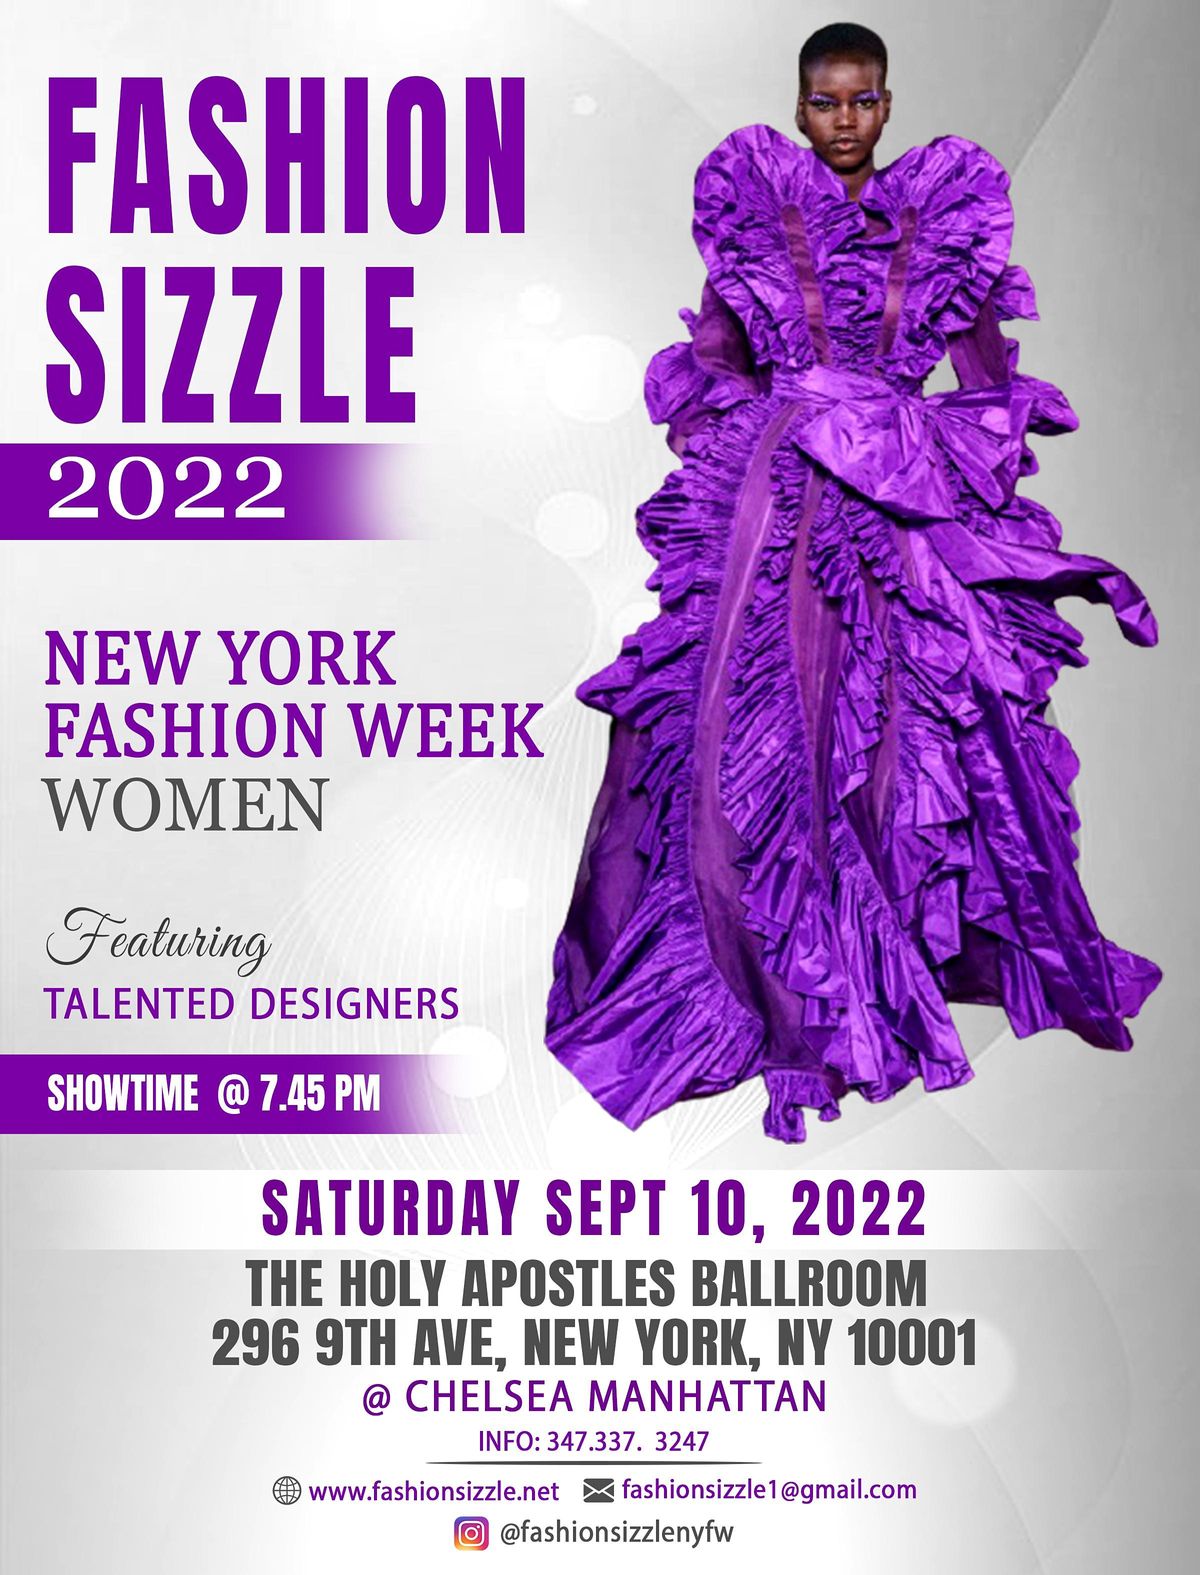 NEW YORK FASHION WEEK SEPT. 2022, Holy Apostles Ballroom, New York, 10